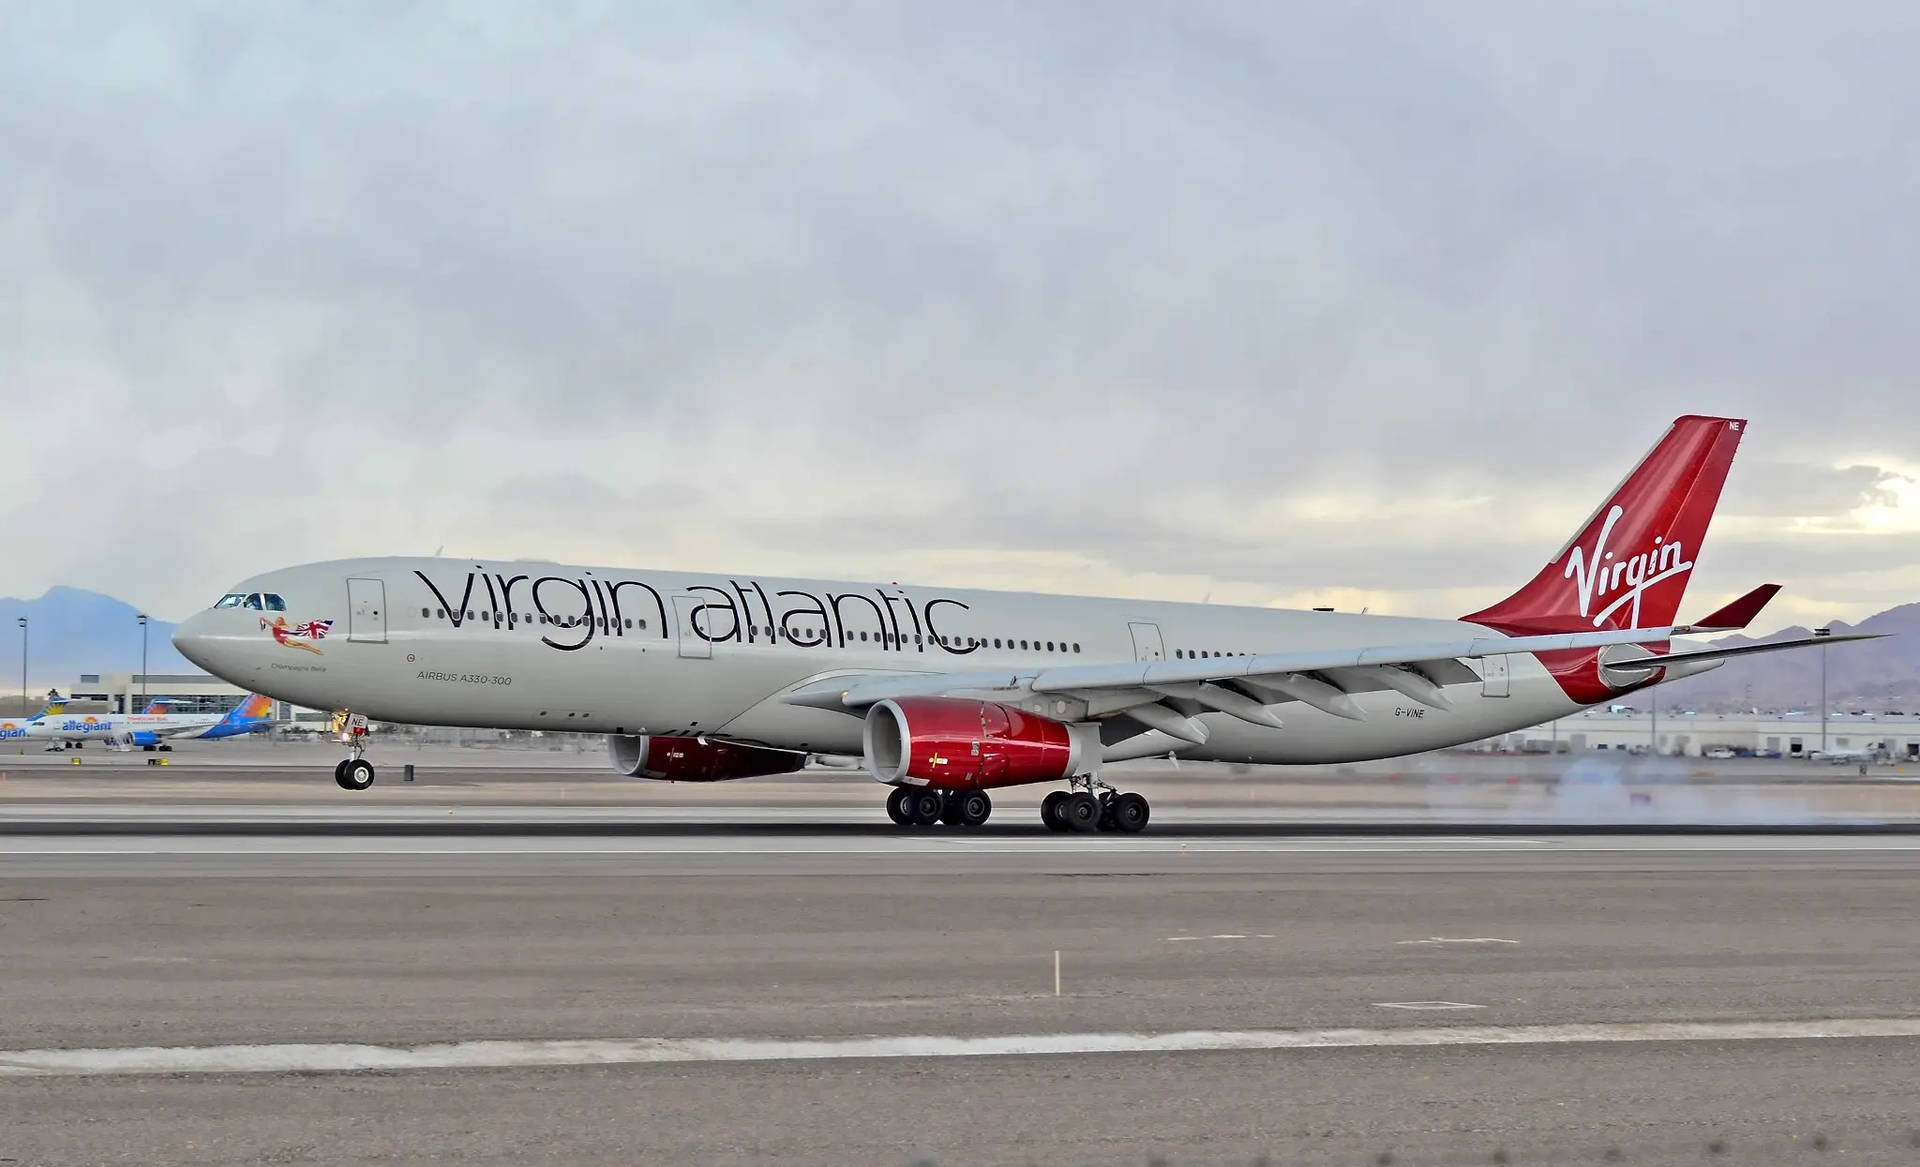 Partenzadell'aviazione Virgin Atlantic Aereo. Sfondo